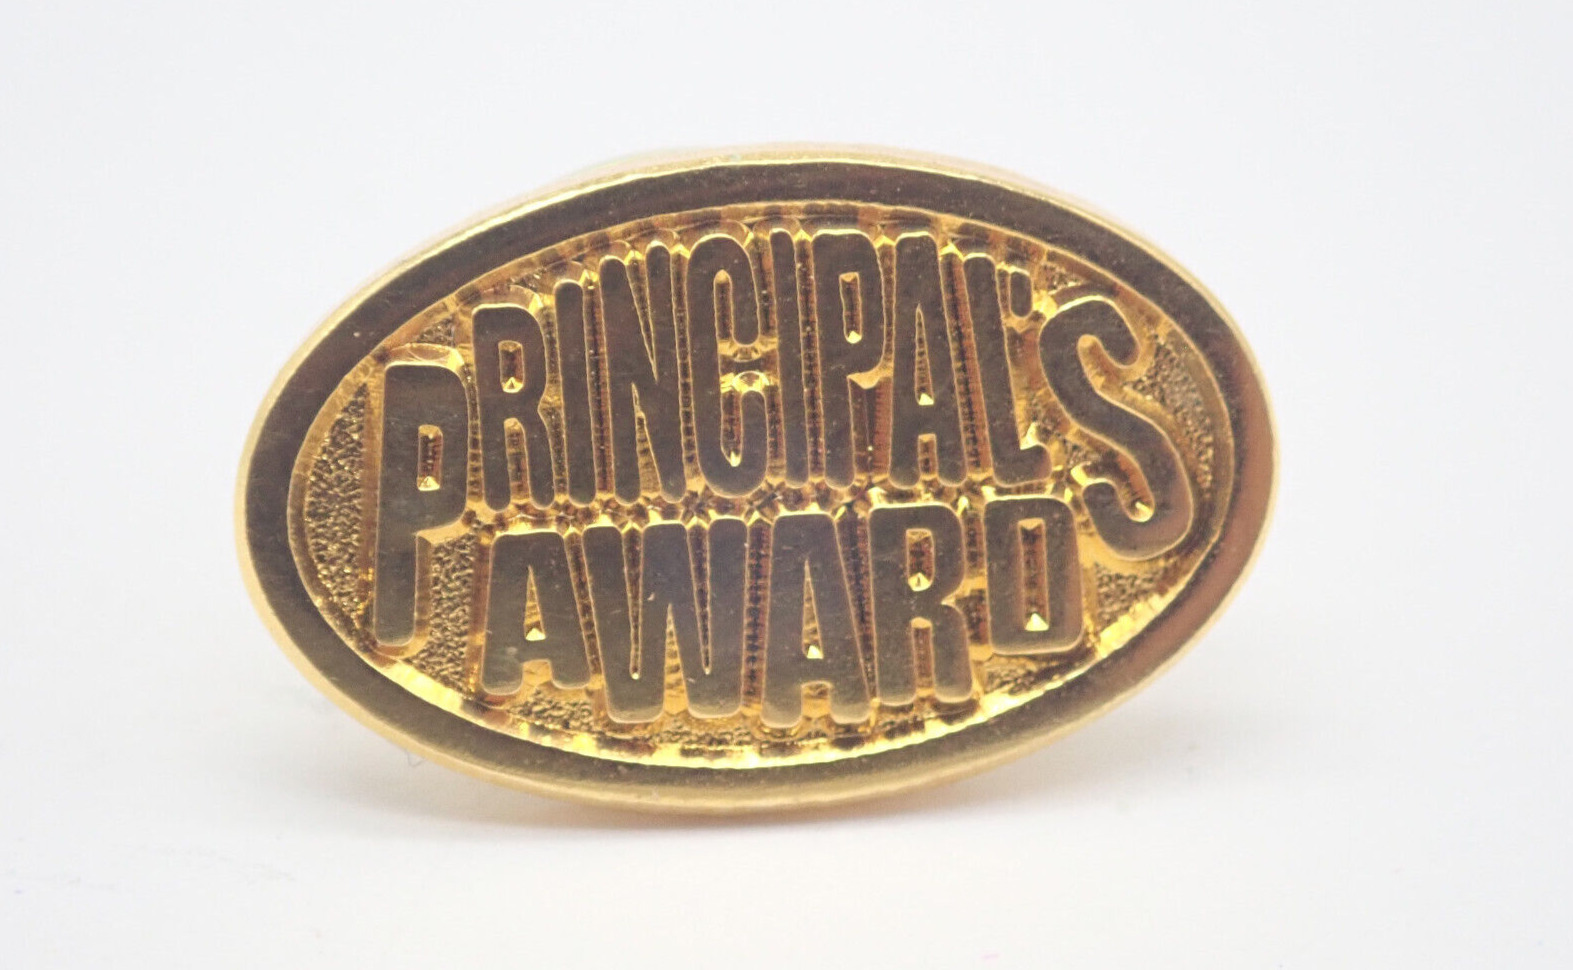 Principals Award Gold Tone Vintage Lapel Pin